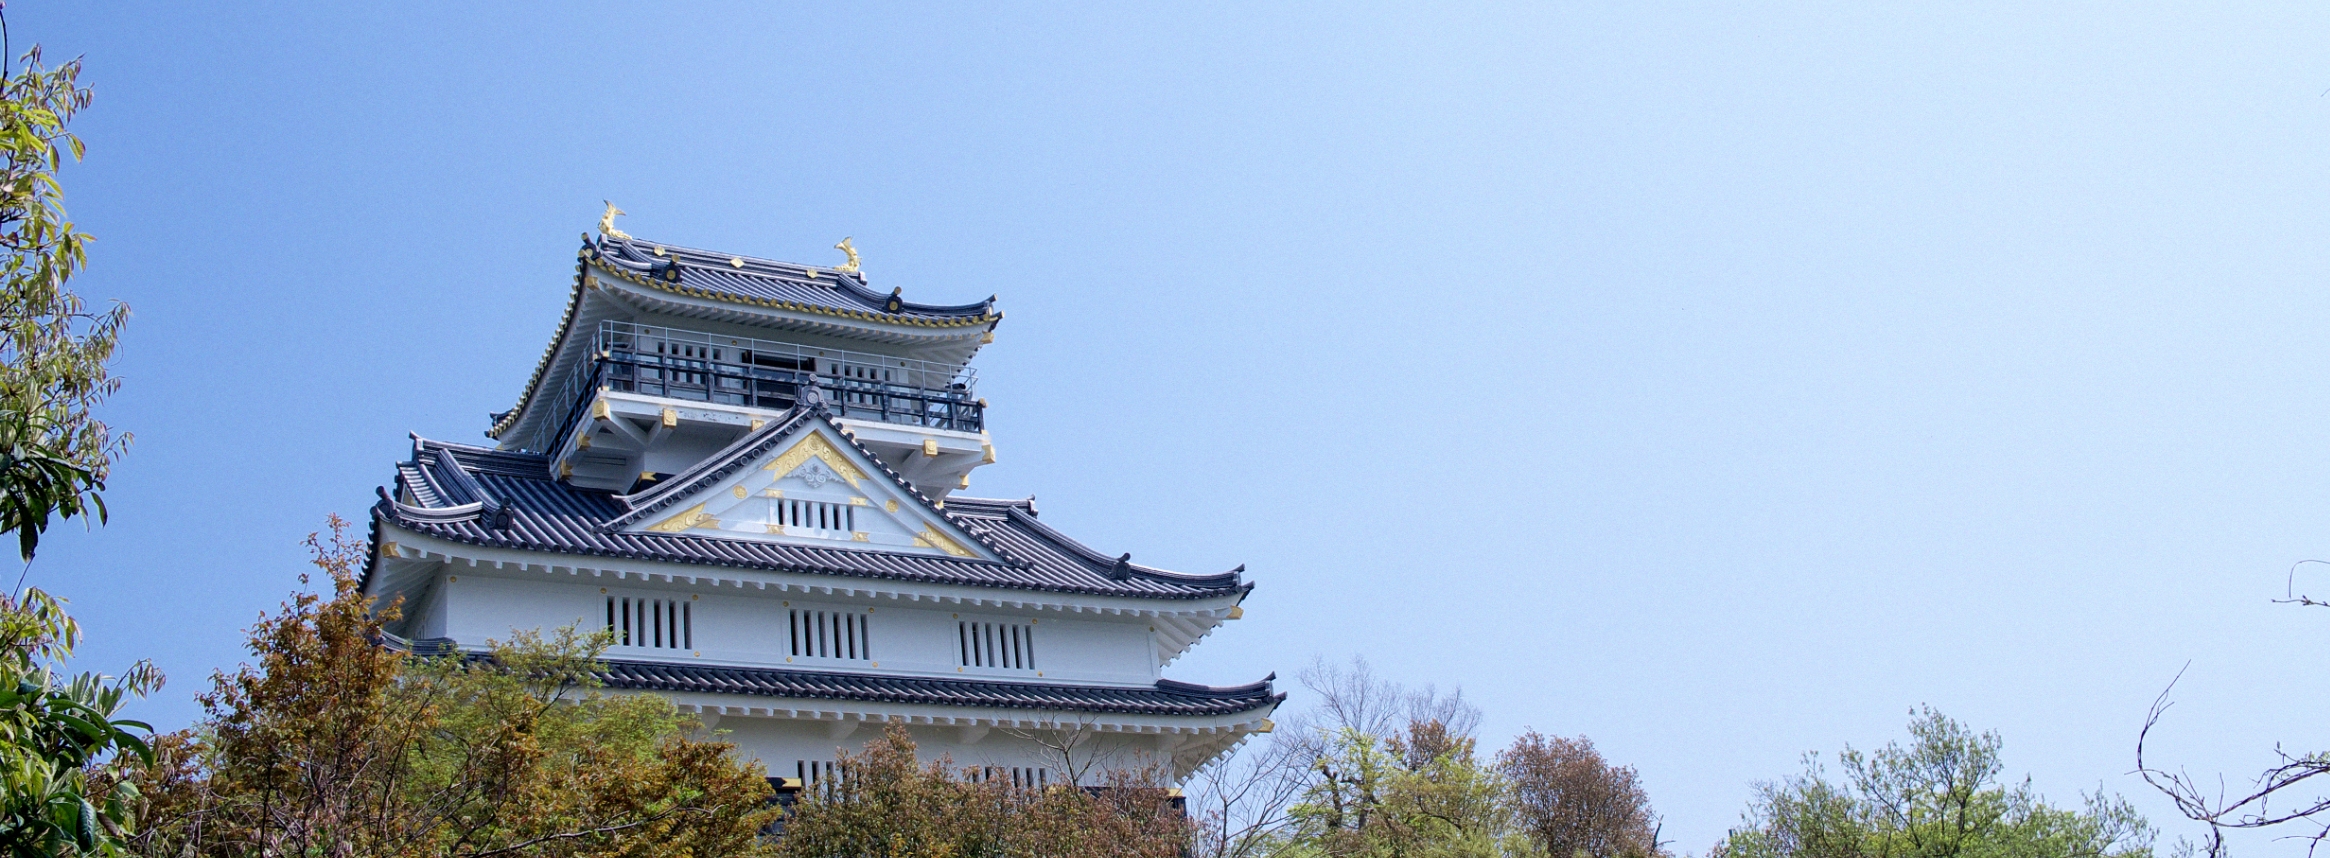 岐阜城の風景写真